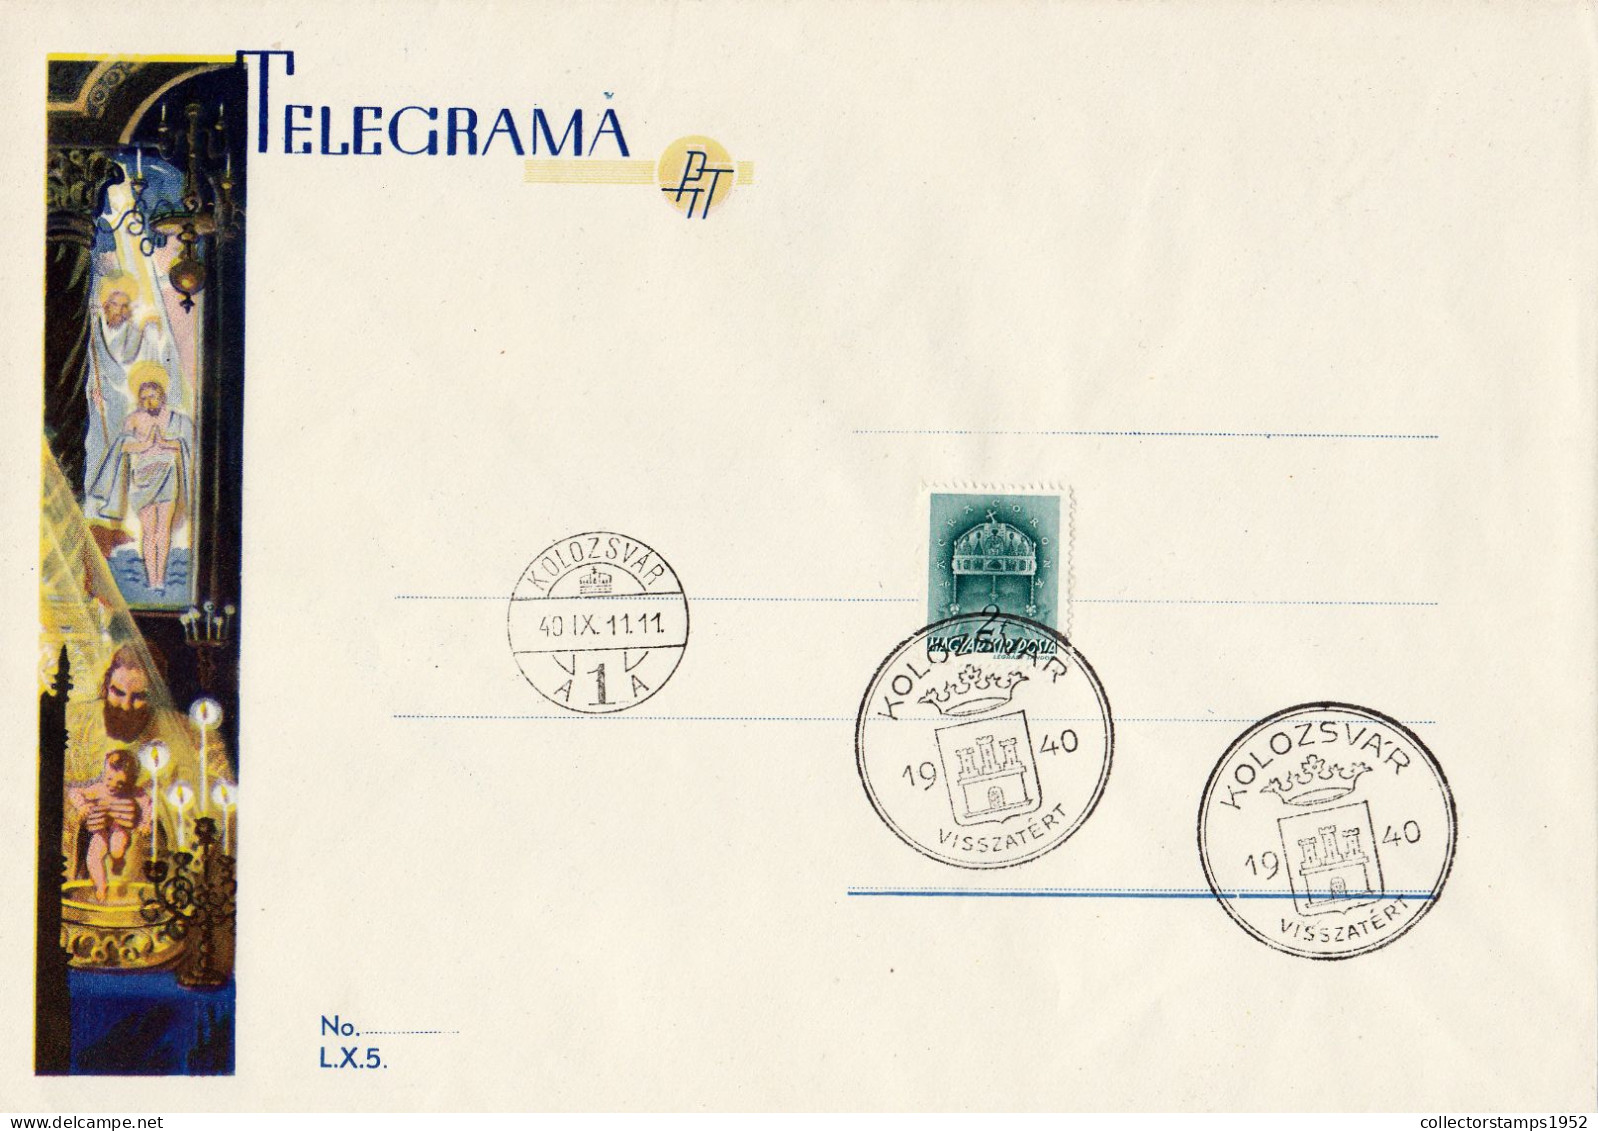 VERY RARE TELEGRAMME,RELIGION,COVERS,LX5, ROMANIA - Telegraphenmarken